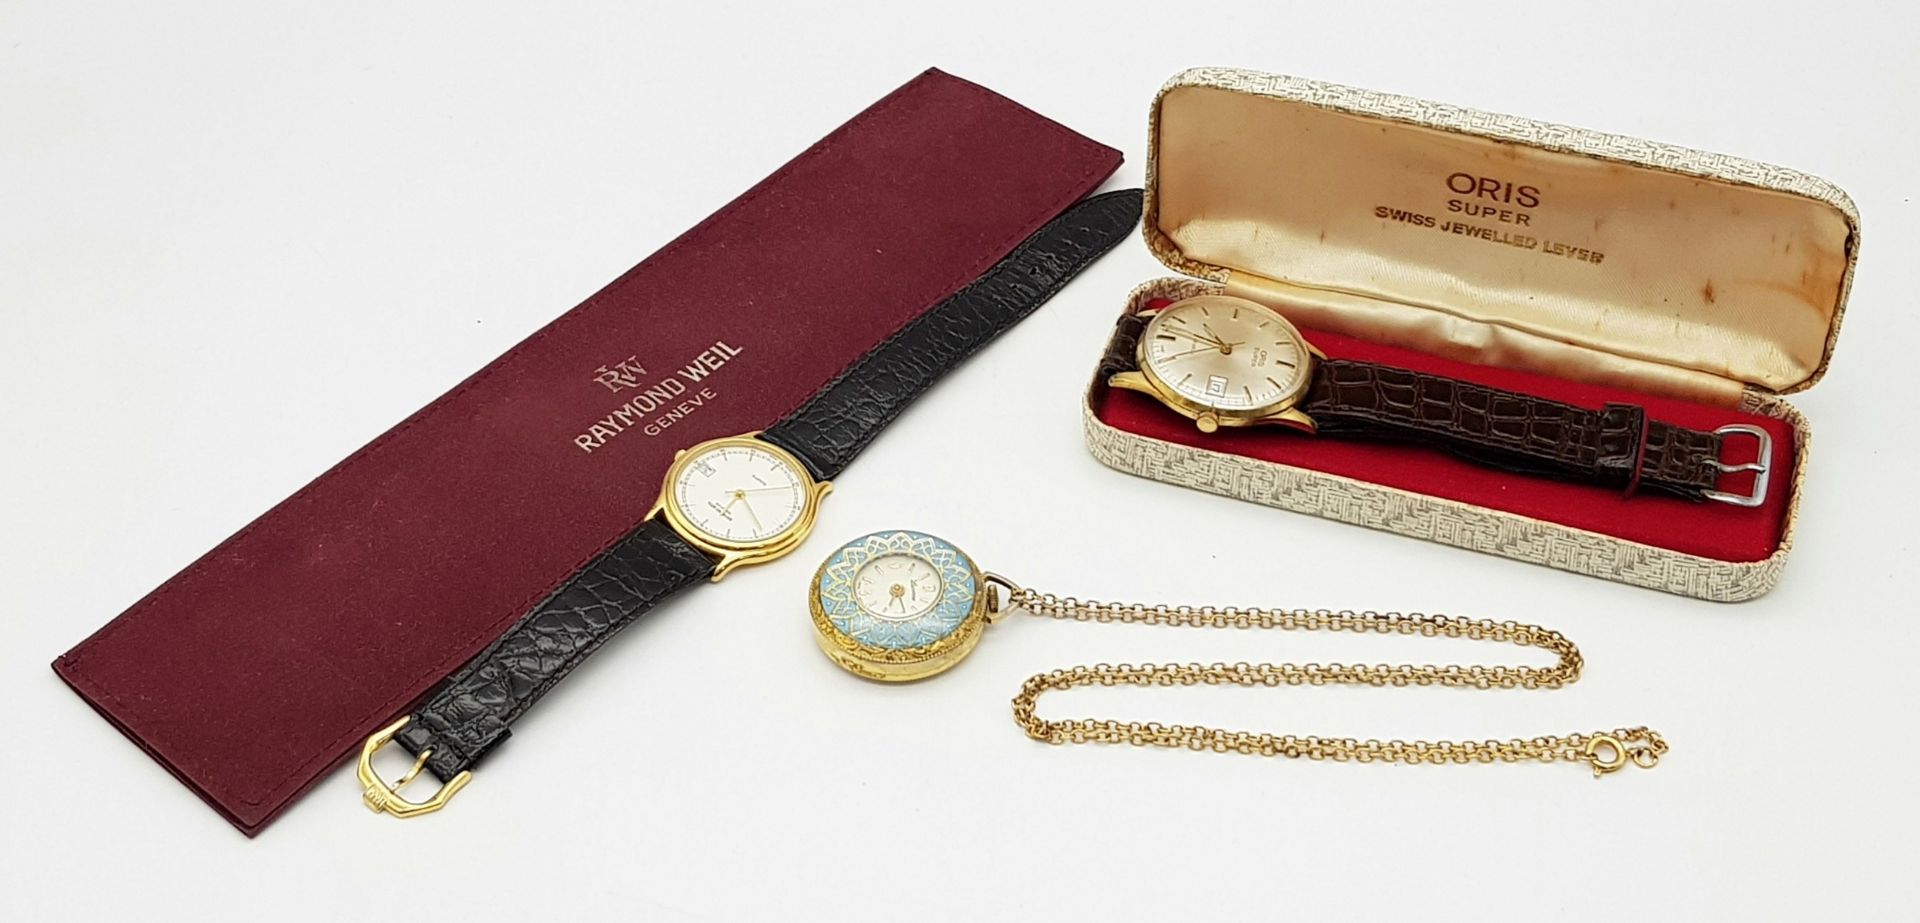 Three Vintage Watches: An Oris Super 17 jewels - working. A Miniature Lucerne Pocket Watch on a - Bild 5 aus 7